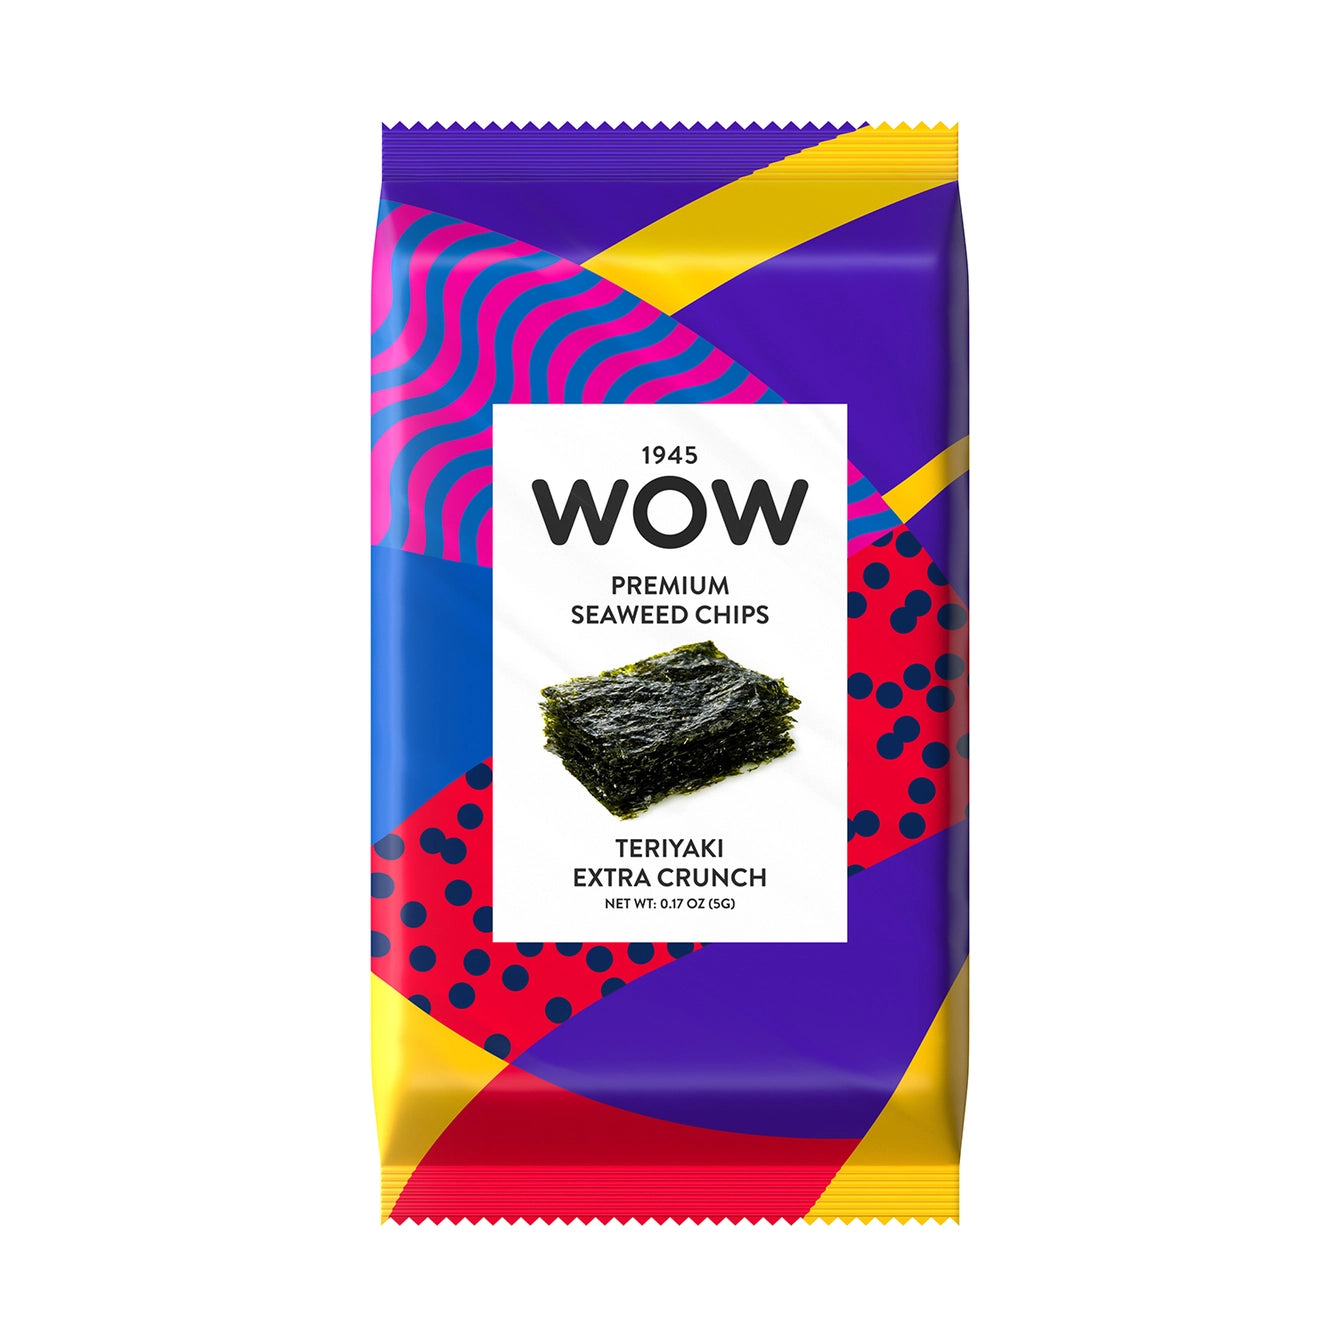 Wow | Premium Seaweed Chips: Teriyaki (30g six pack)